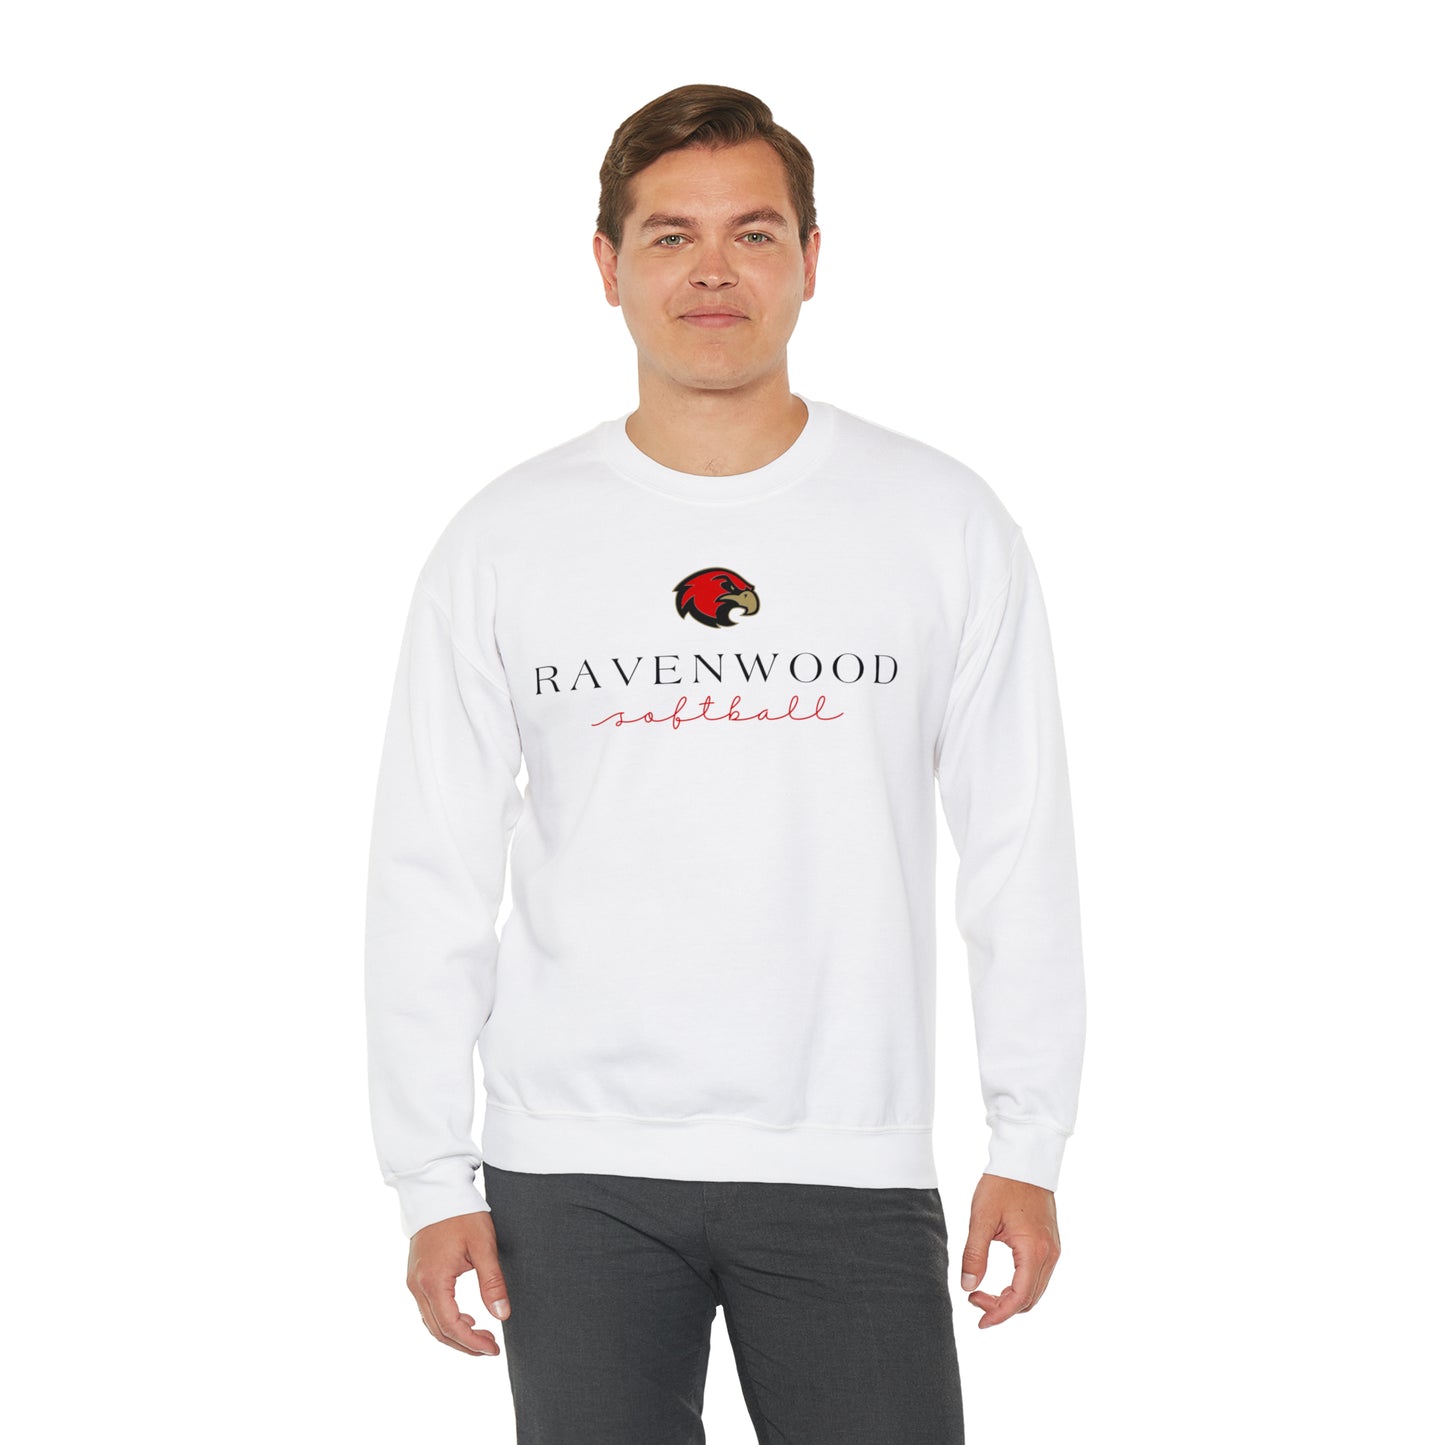 Ravenwood Softball Cursive Crewneck Sweatshirt